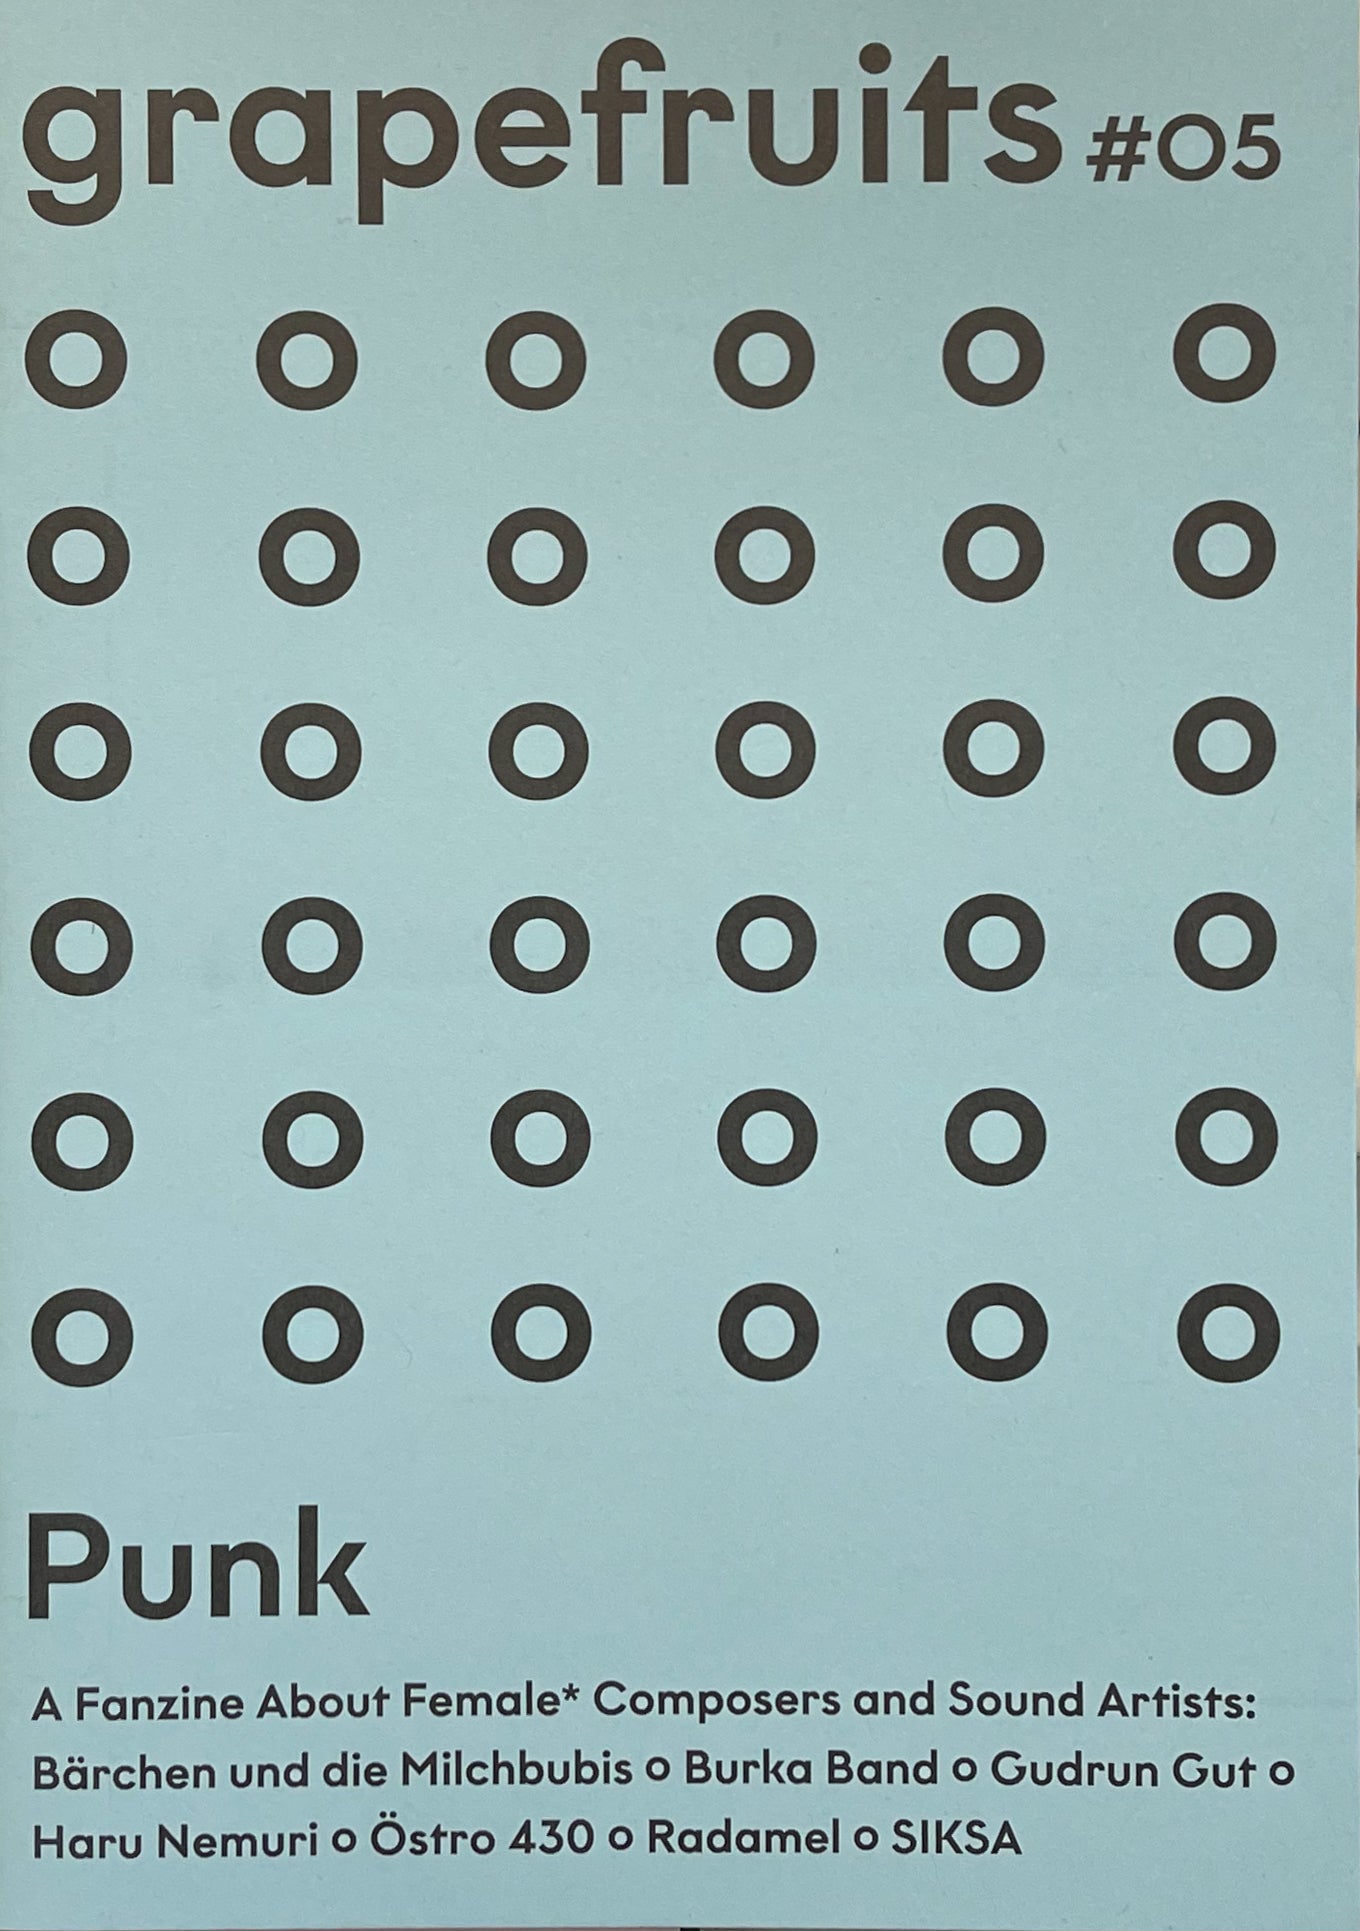 grapefruits Issue #05 on Punk